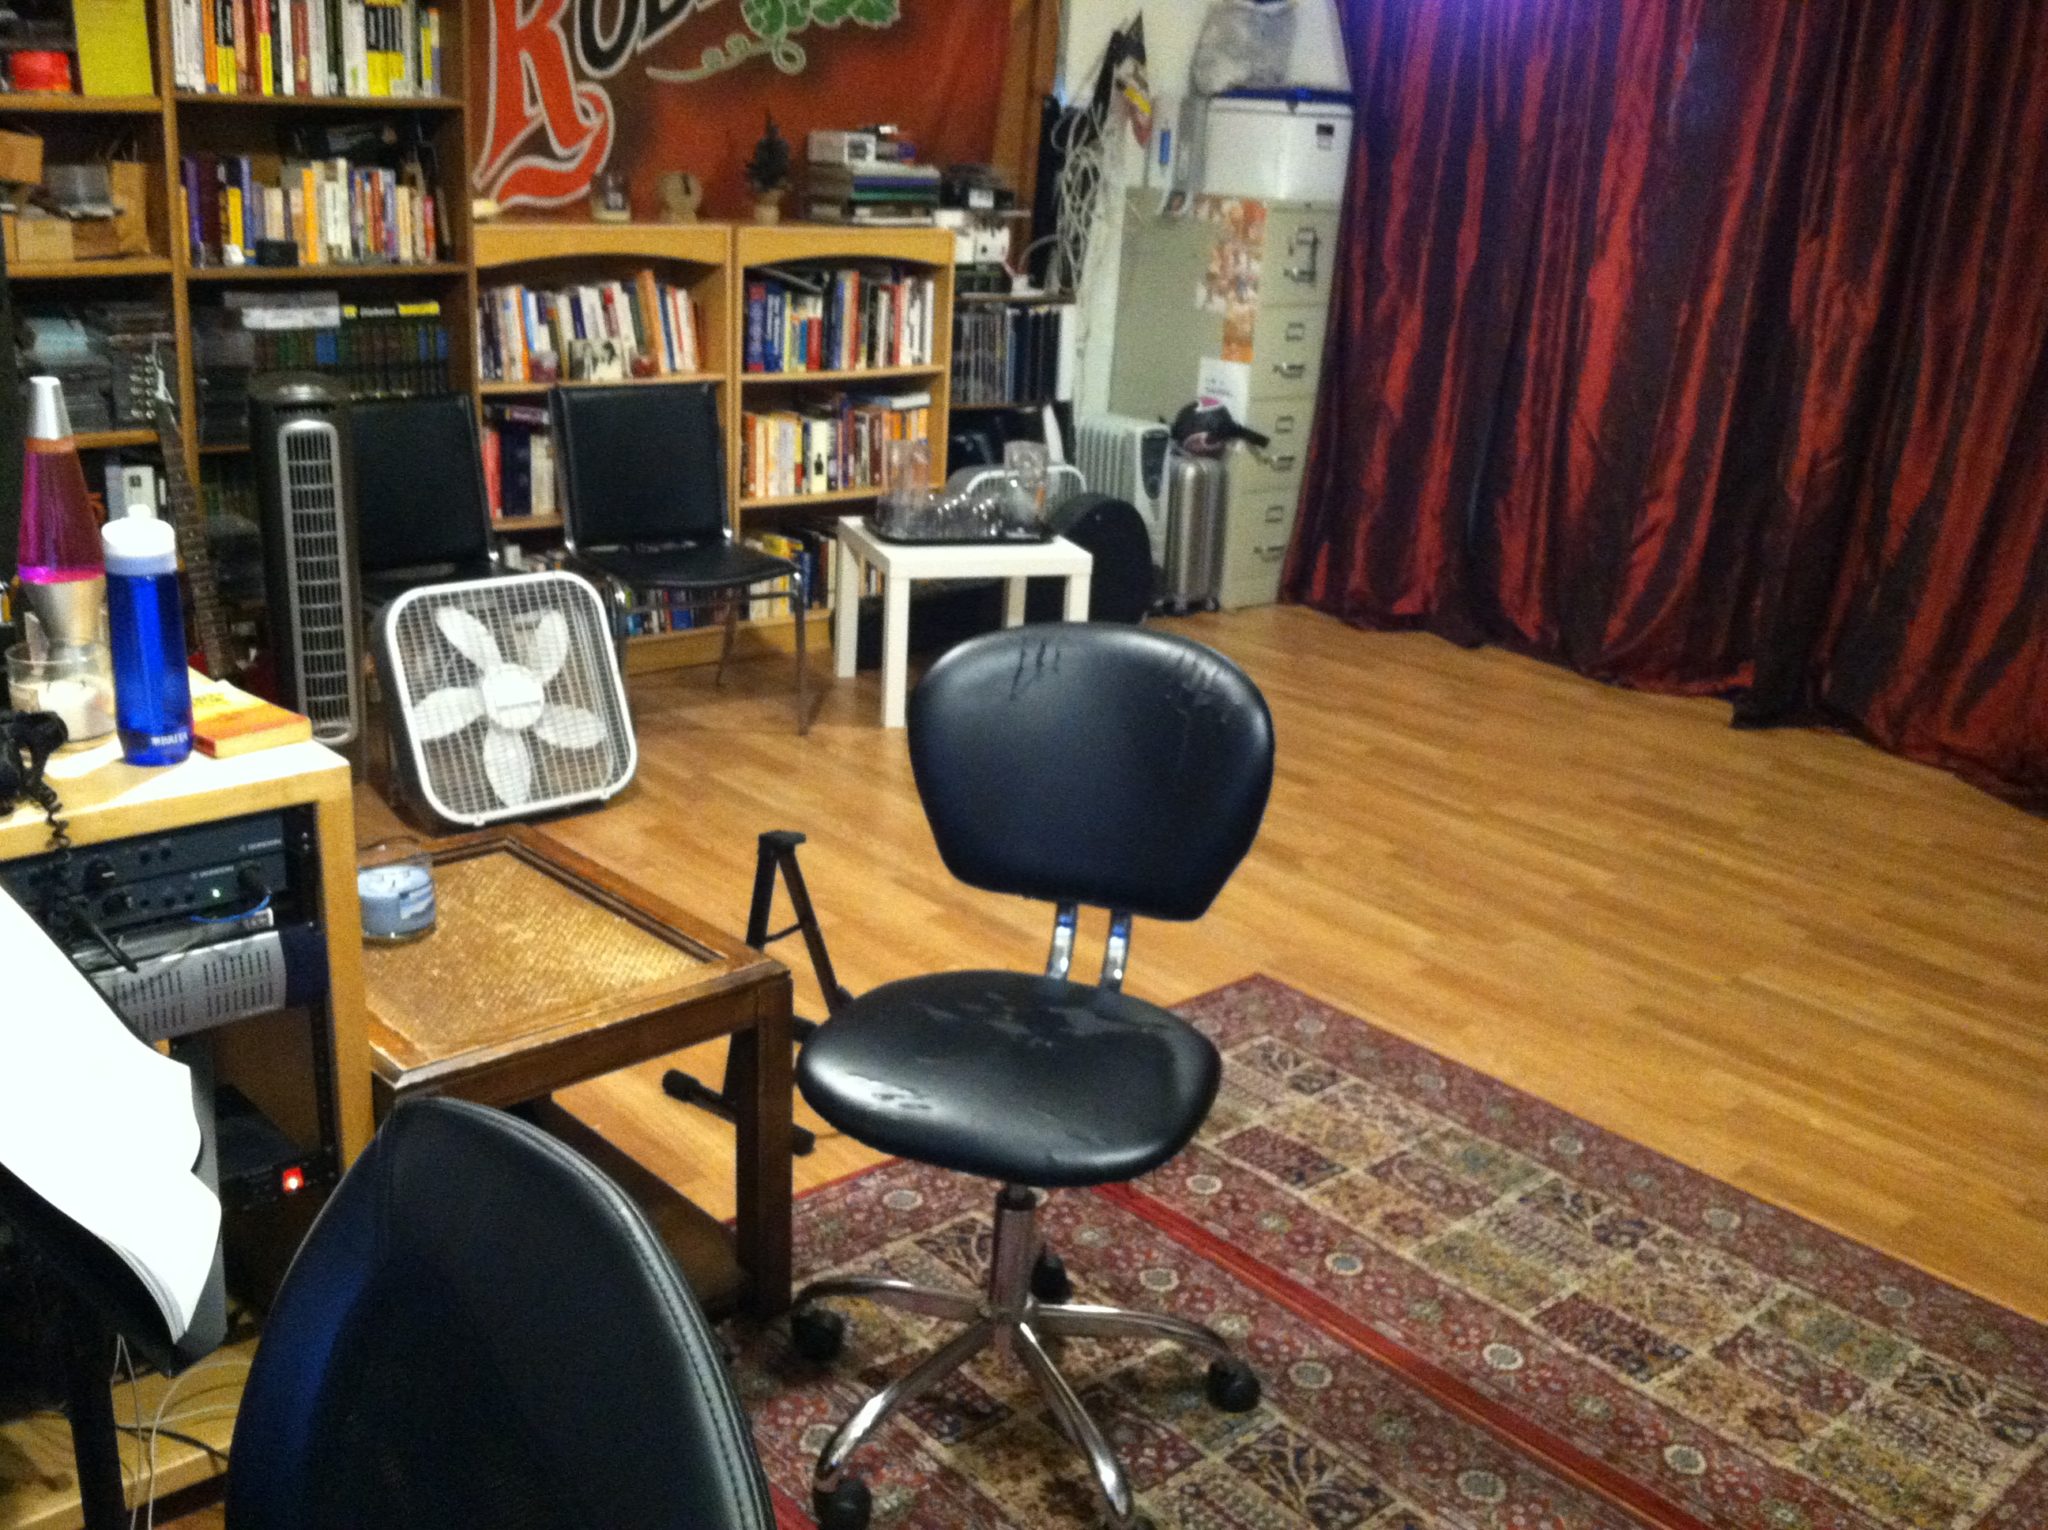 The ZOT Zin Music guitar lessons studio